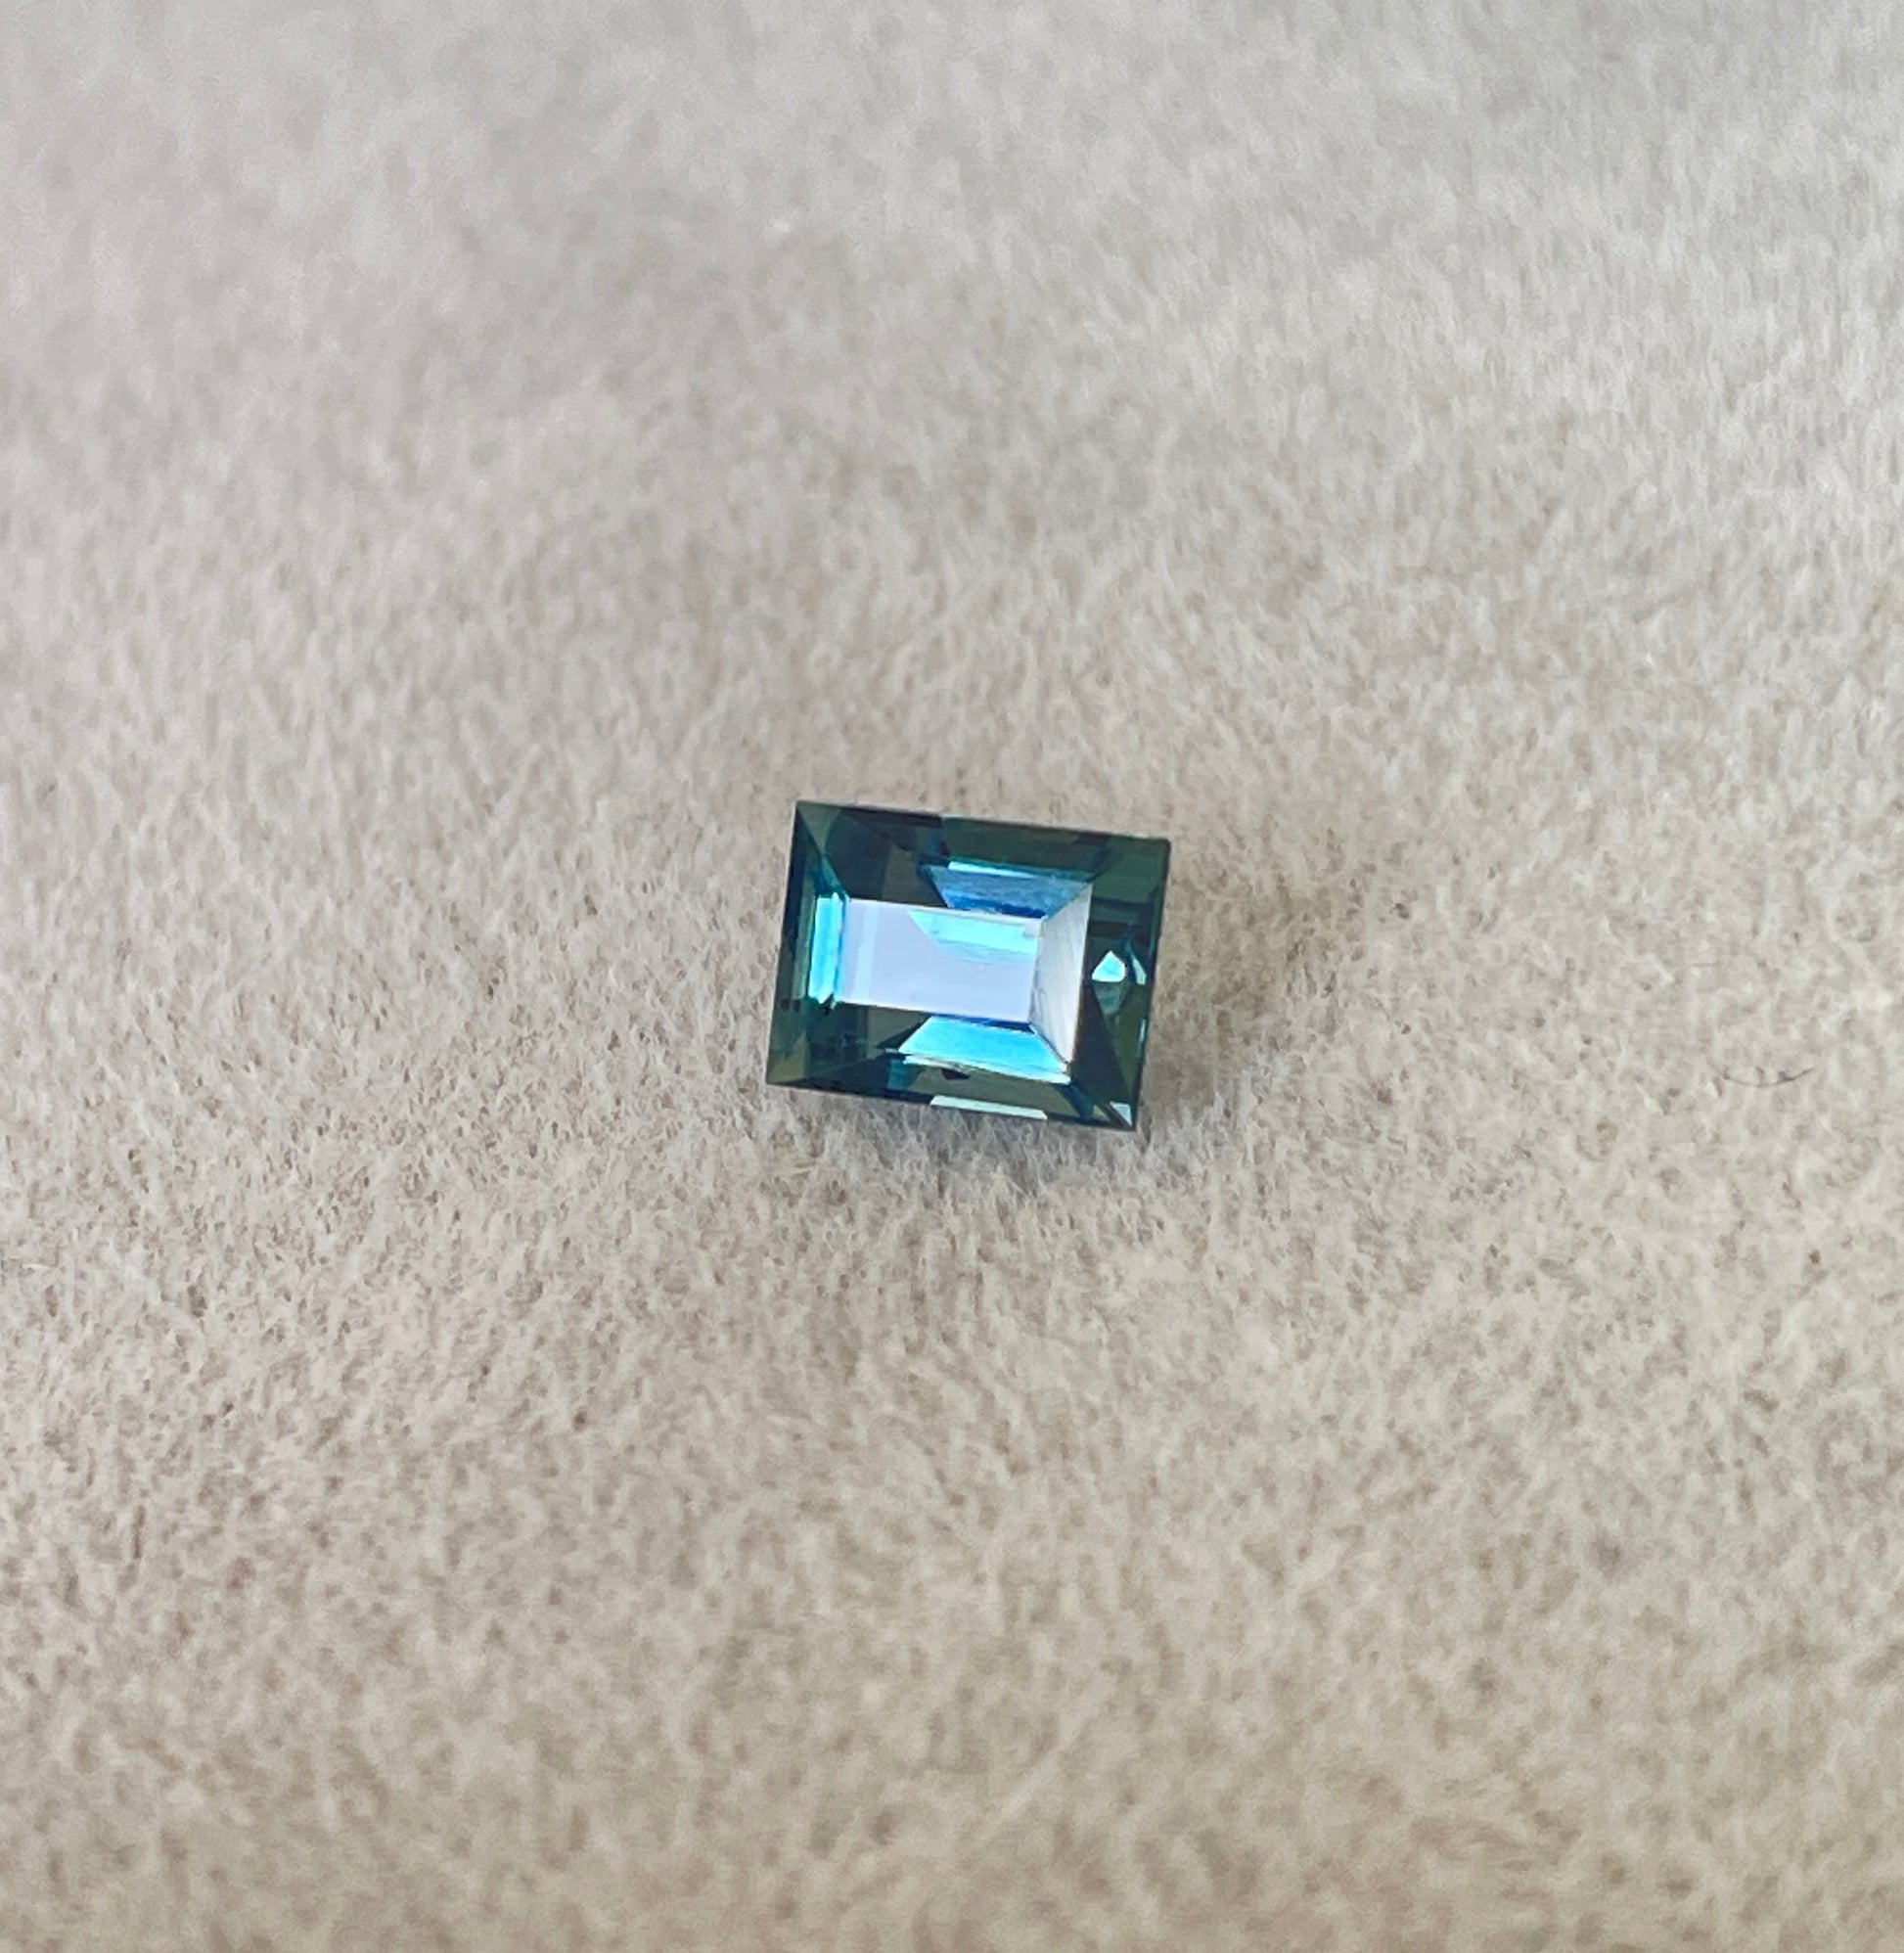 This 0.79 crt Teal Sapphire/ Green sapphire/ bi colour Sapphire/ parti sapphire/ Engagement Ring/ Montana sapphire/ Australian sapphire